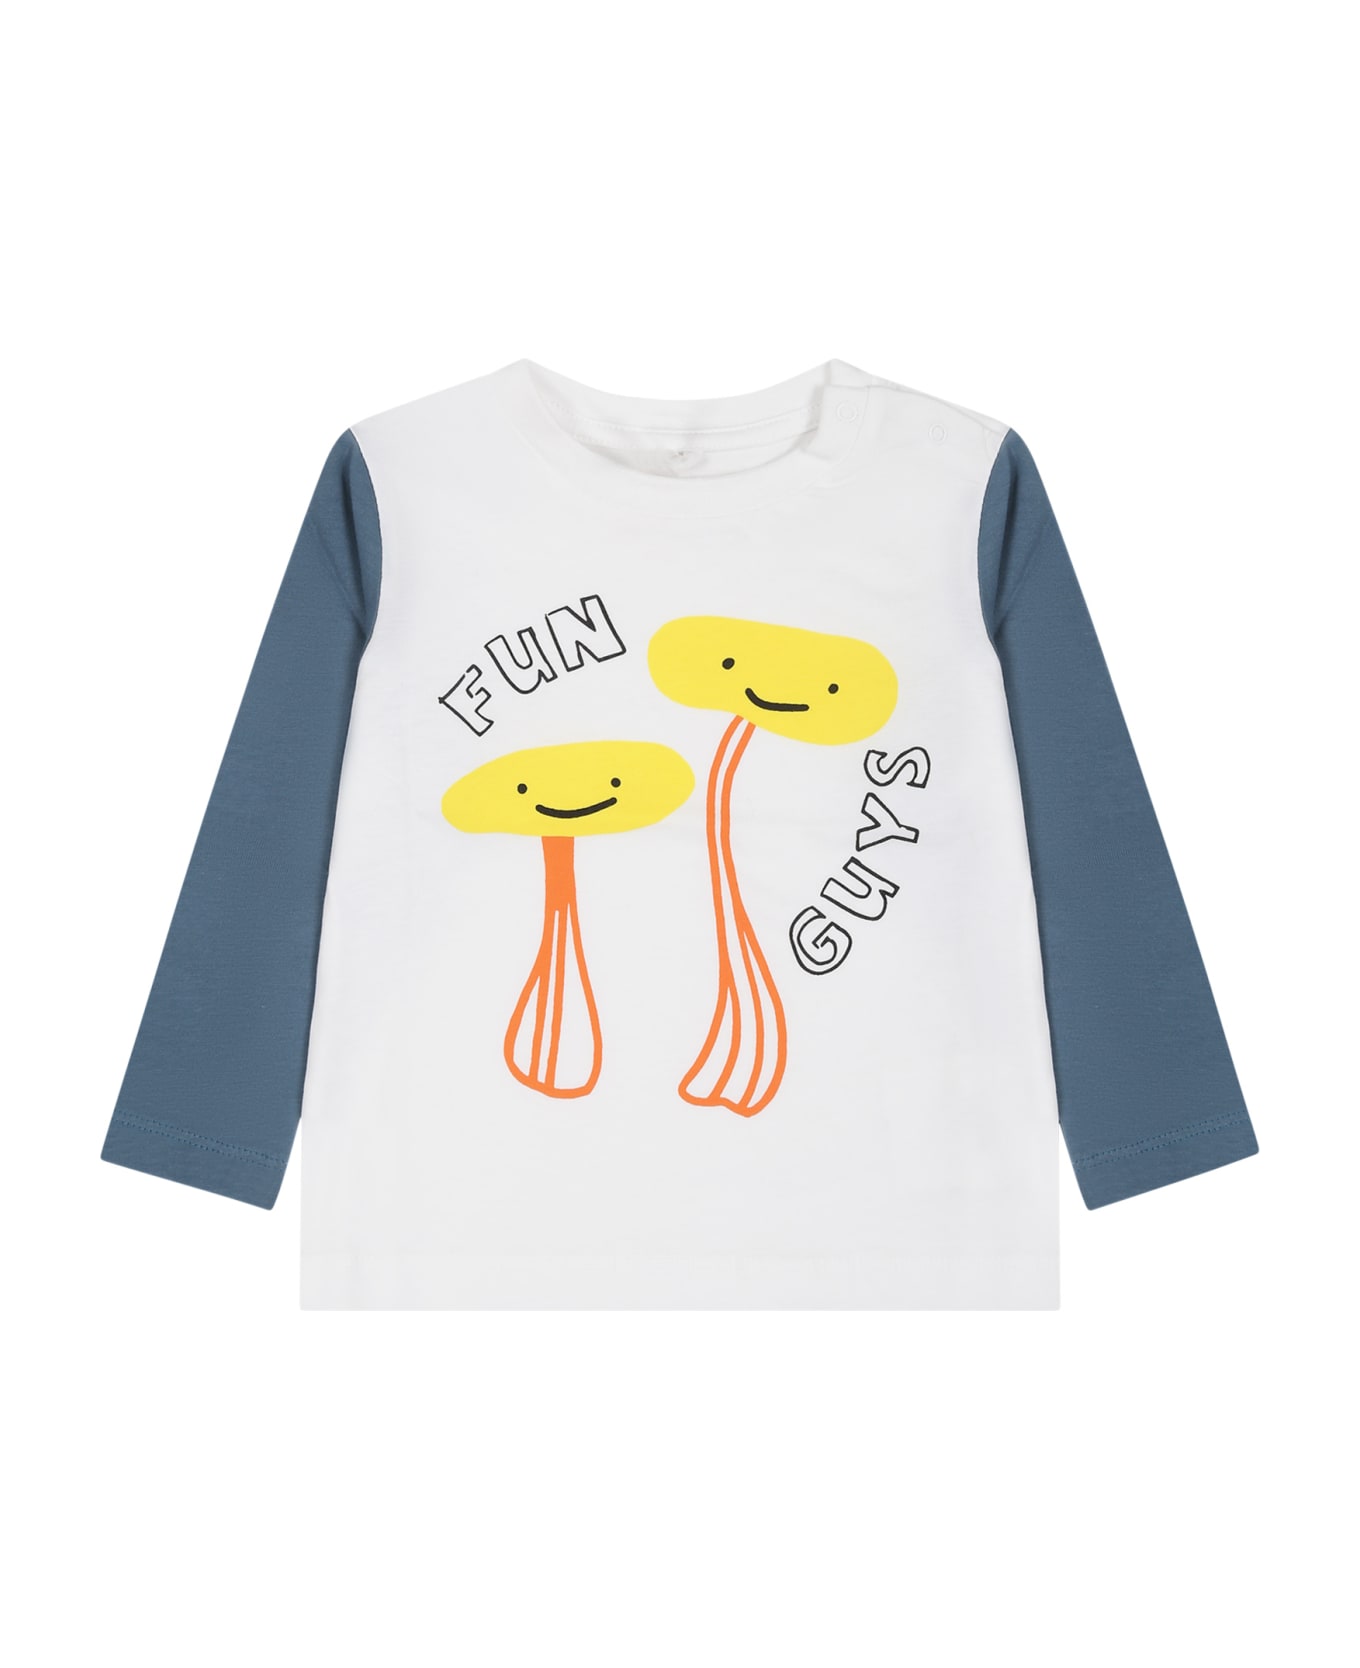 Stella McCartney Kids White T-shirt For Baby Kids With Mushroom Print - White